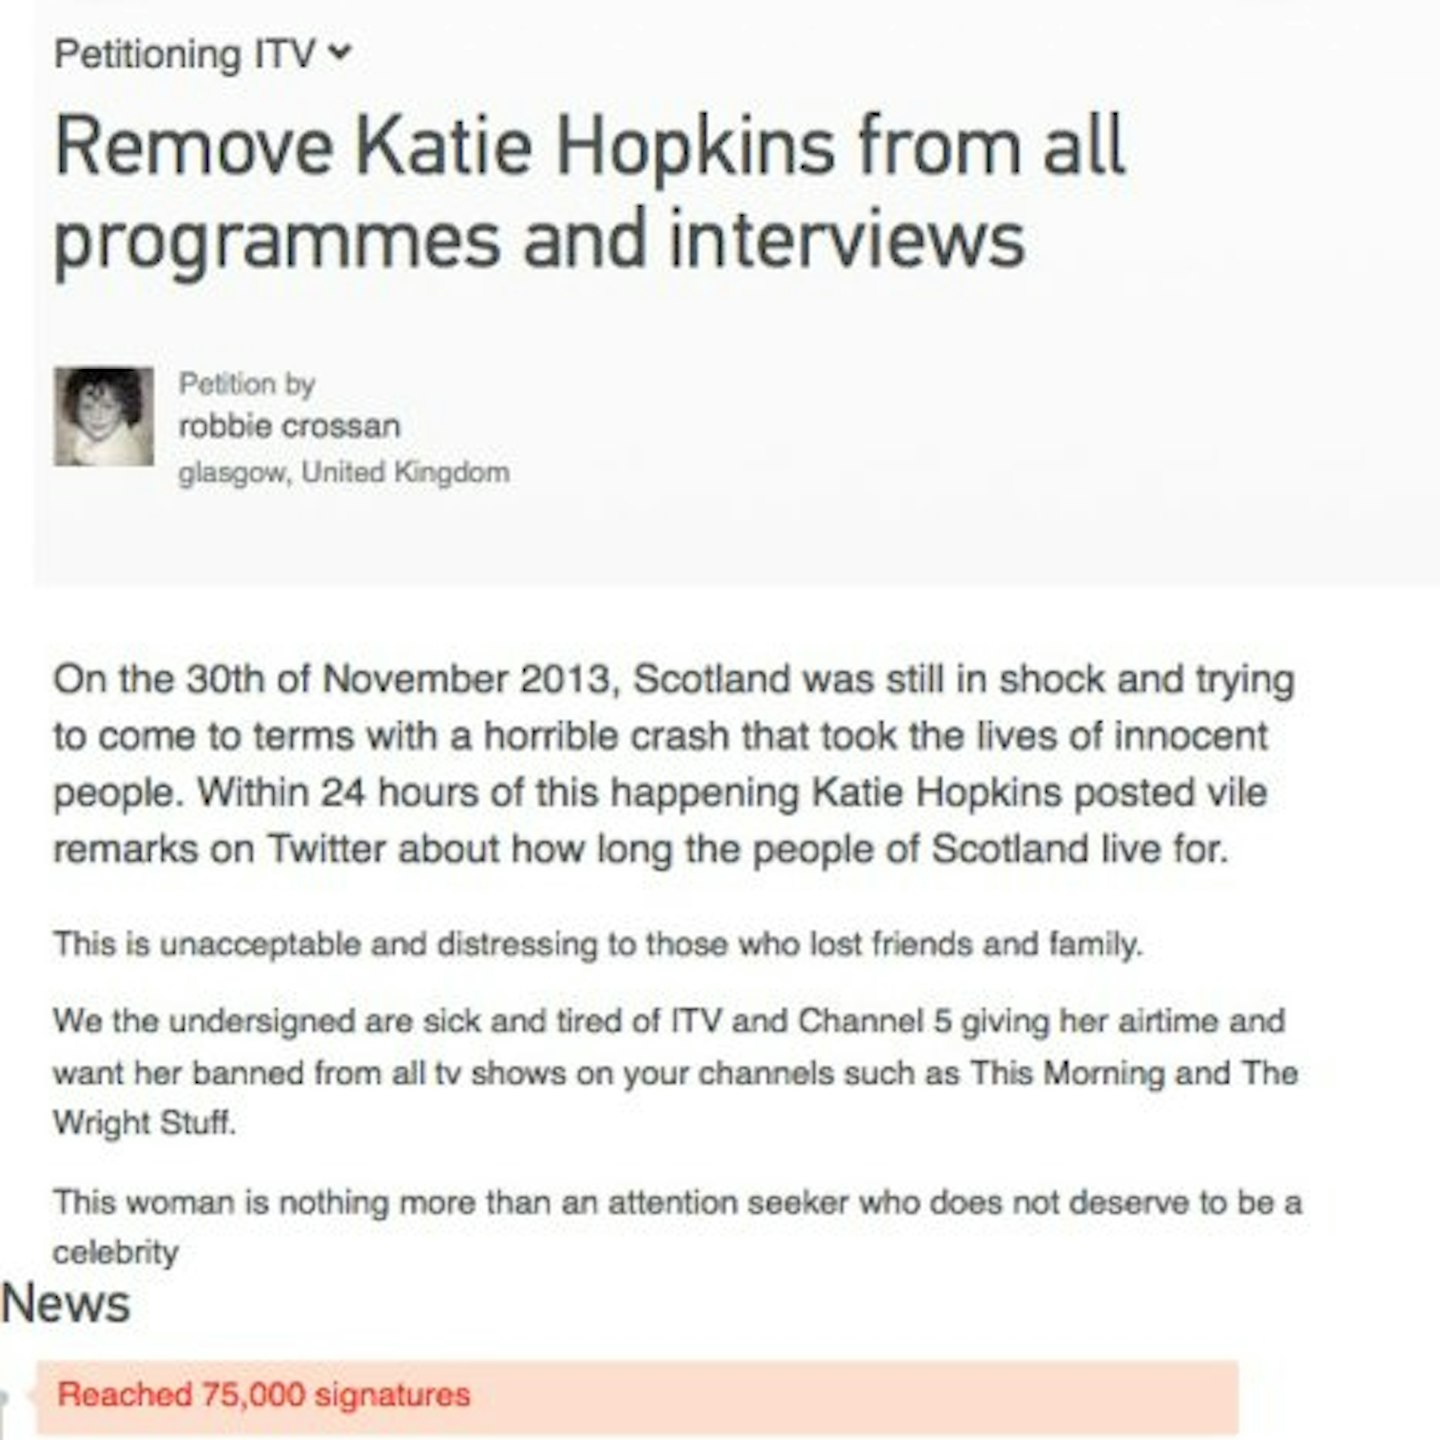 The anti-Hopkins petition